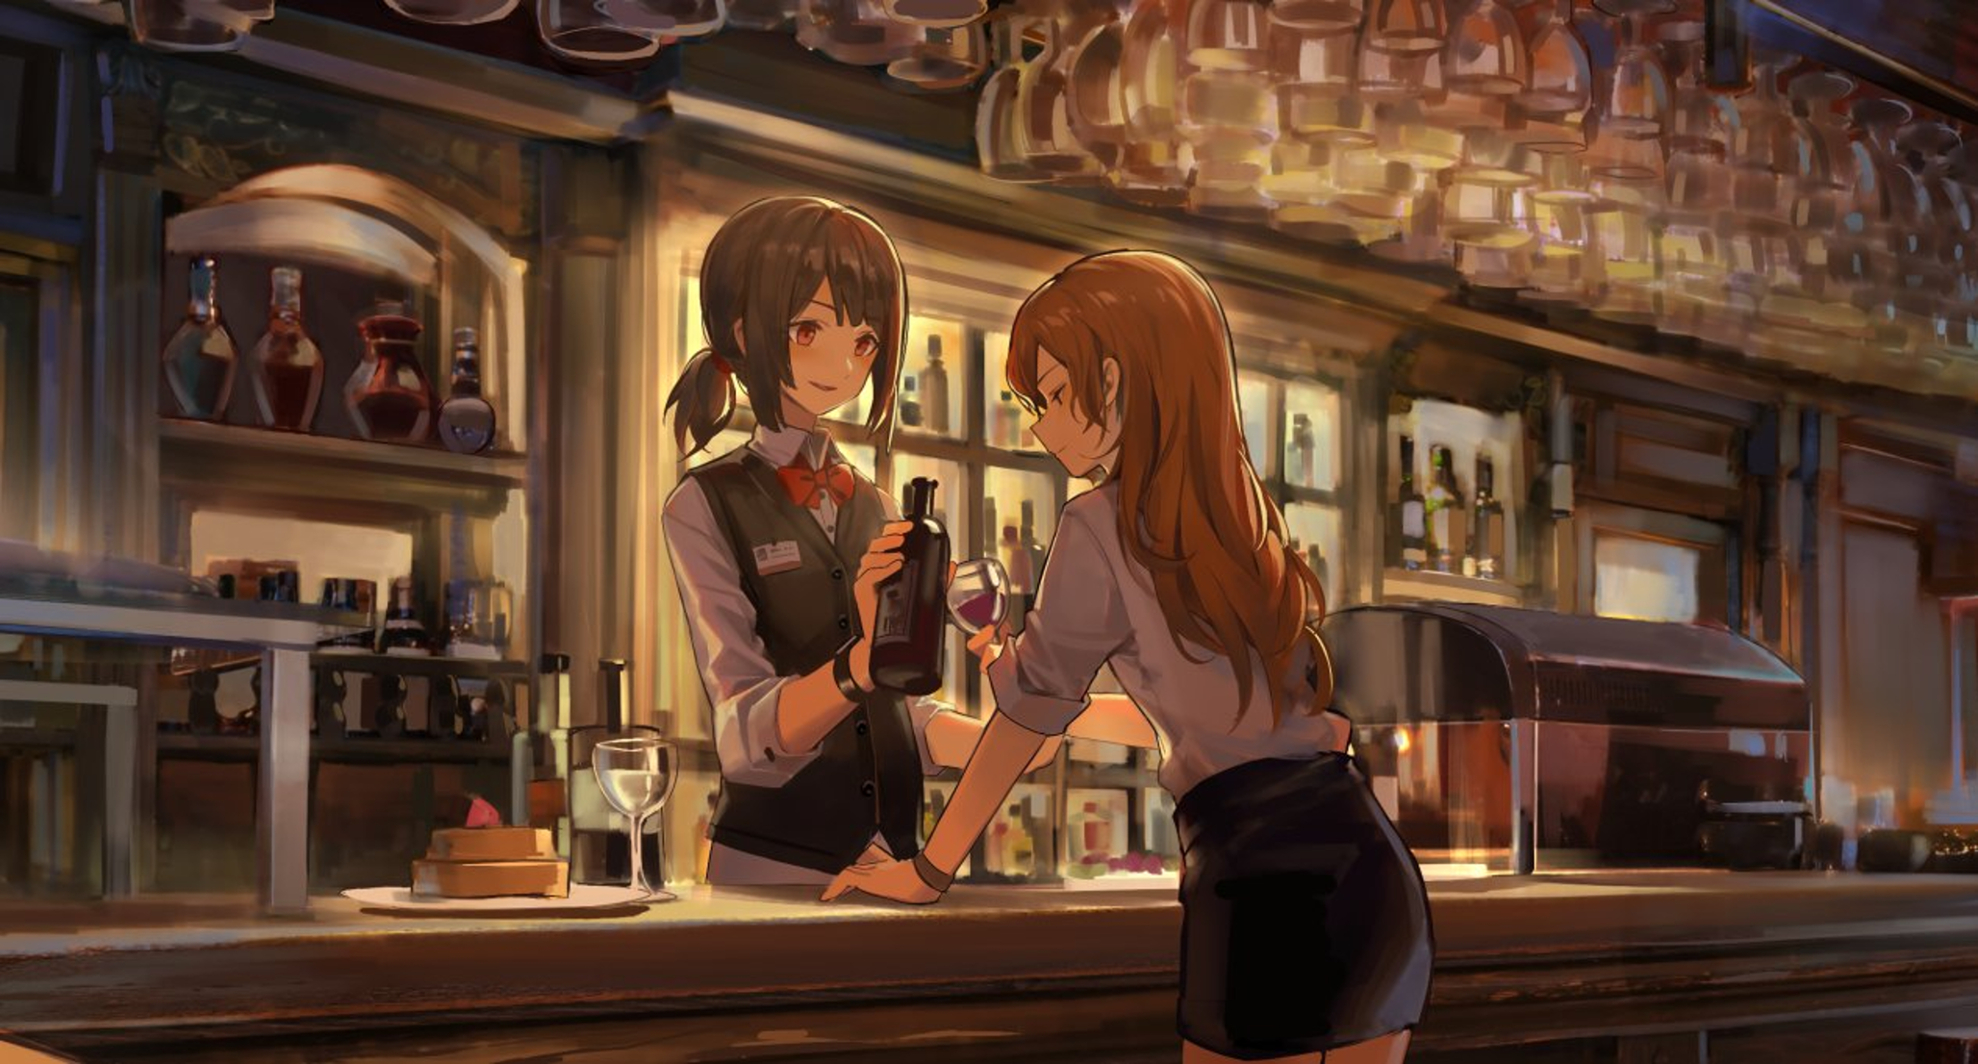 棋牌场景酒吧 御纸 Scenery background Episode backgrounds Anime background